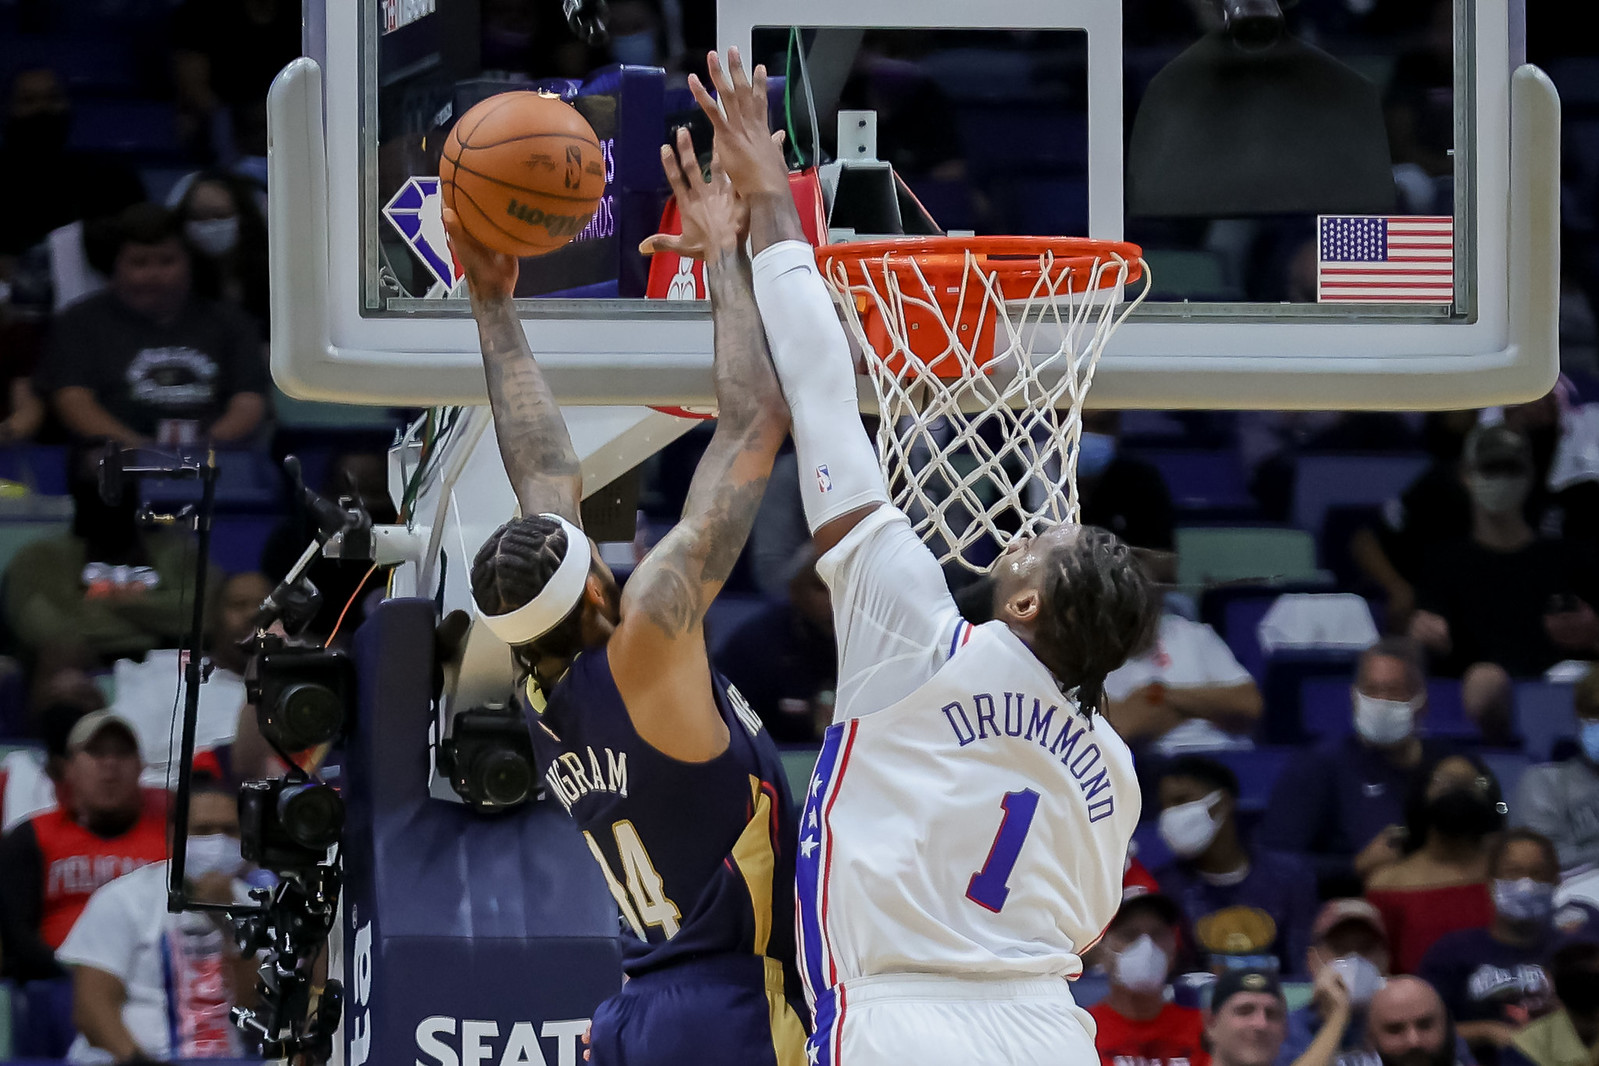 NBA: Philadelphia 76ers at New Orleans Pelicans